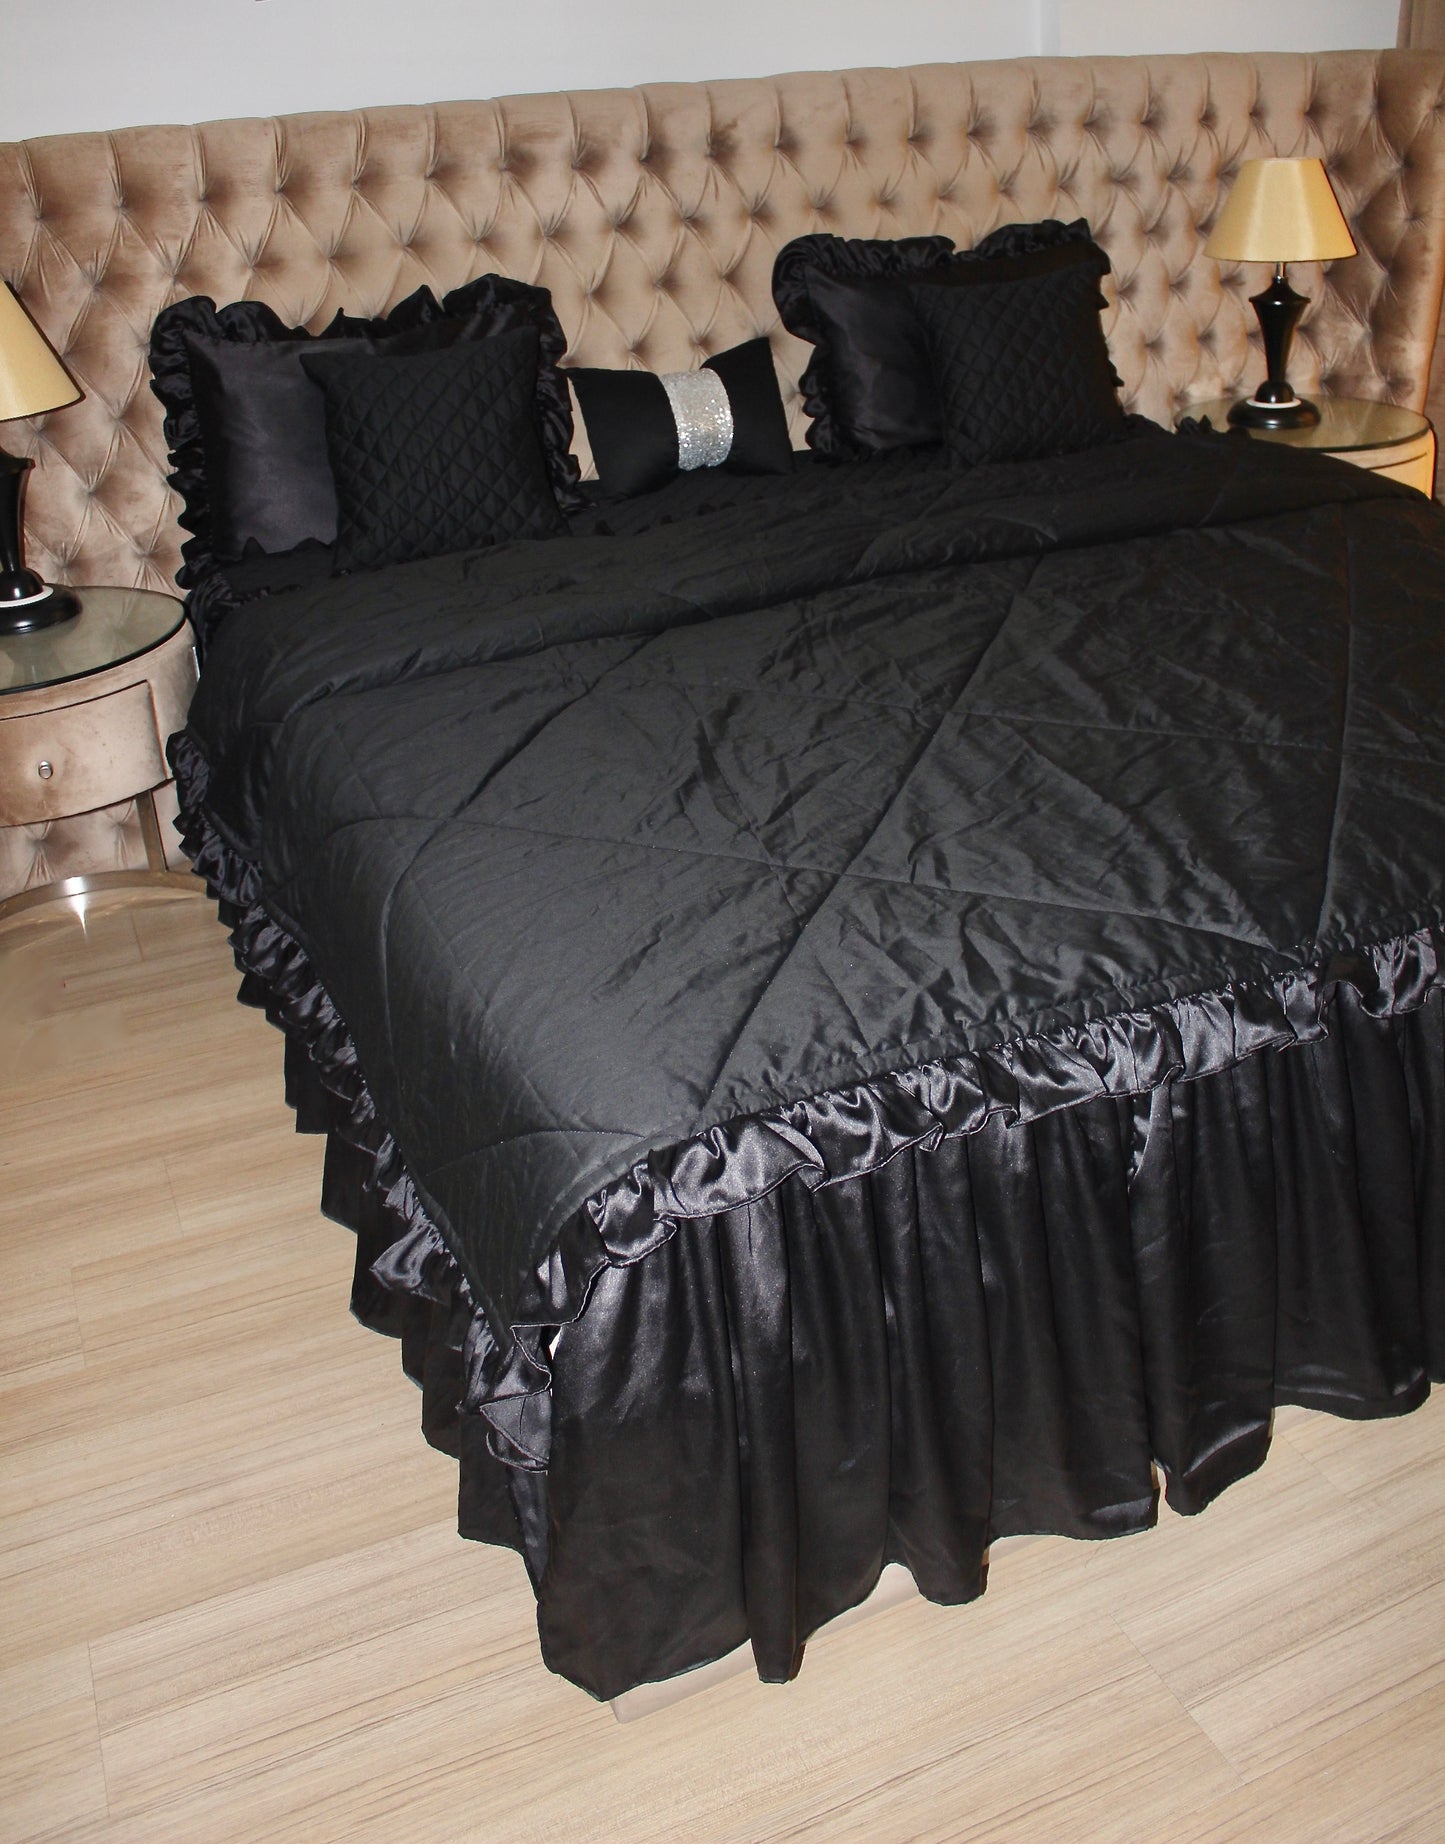 Monochrome frill bedding set